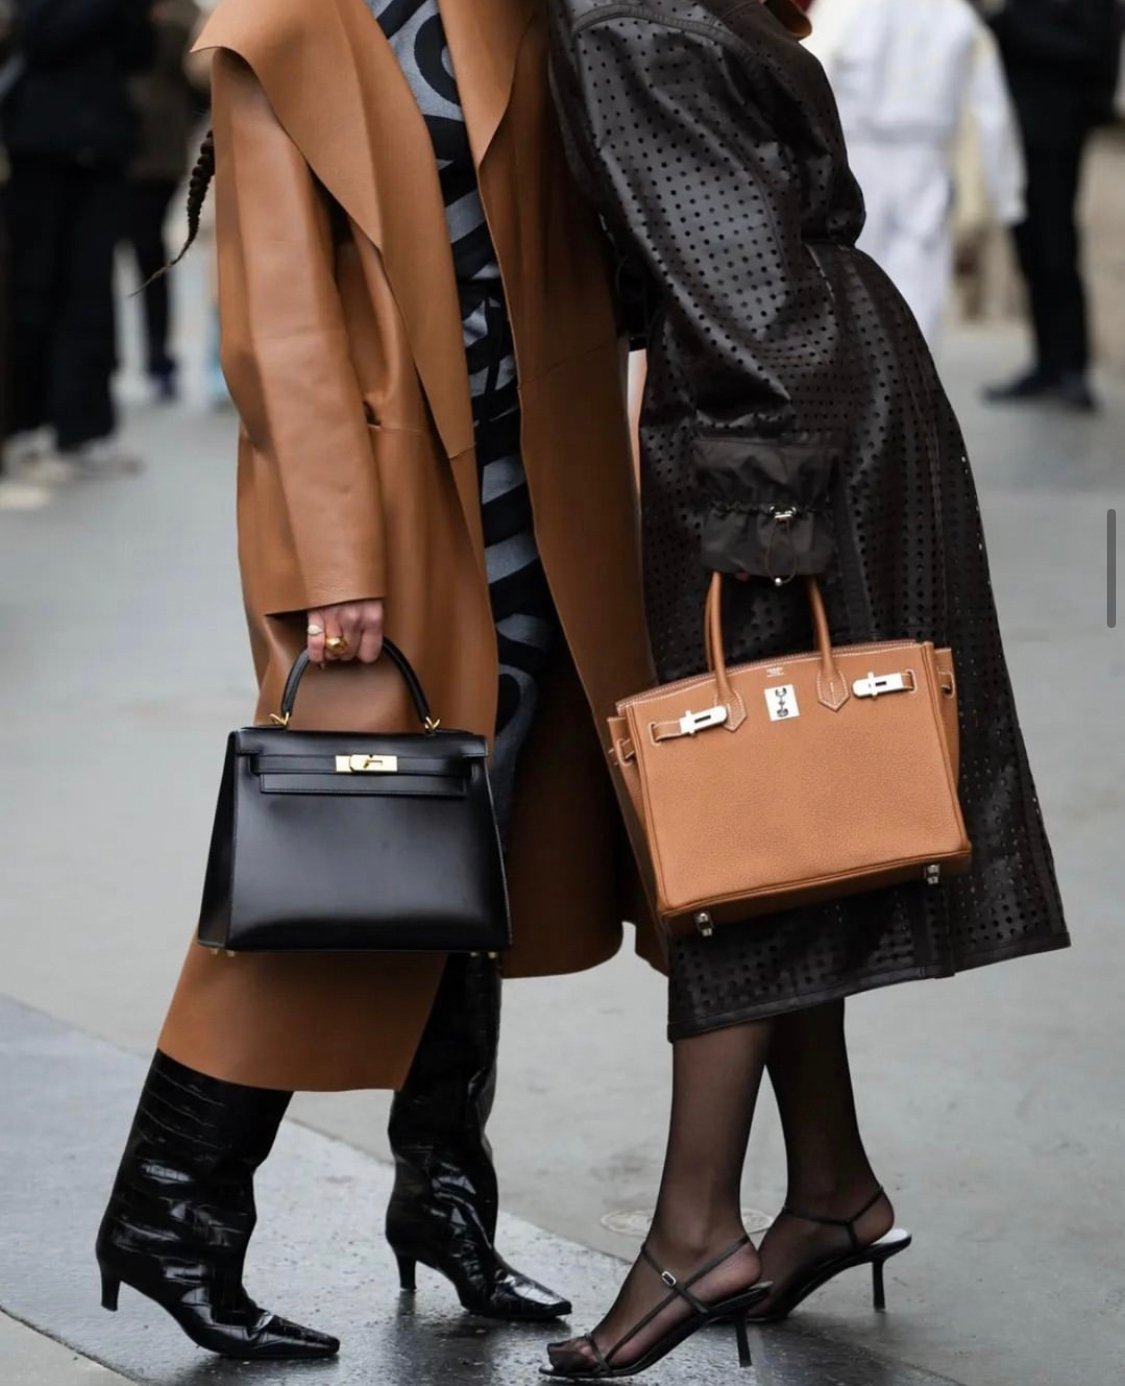 Hermès Birkin & Kelly Prices 2023: How Much Have Prices Increased? -  PurseBop